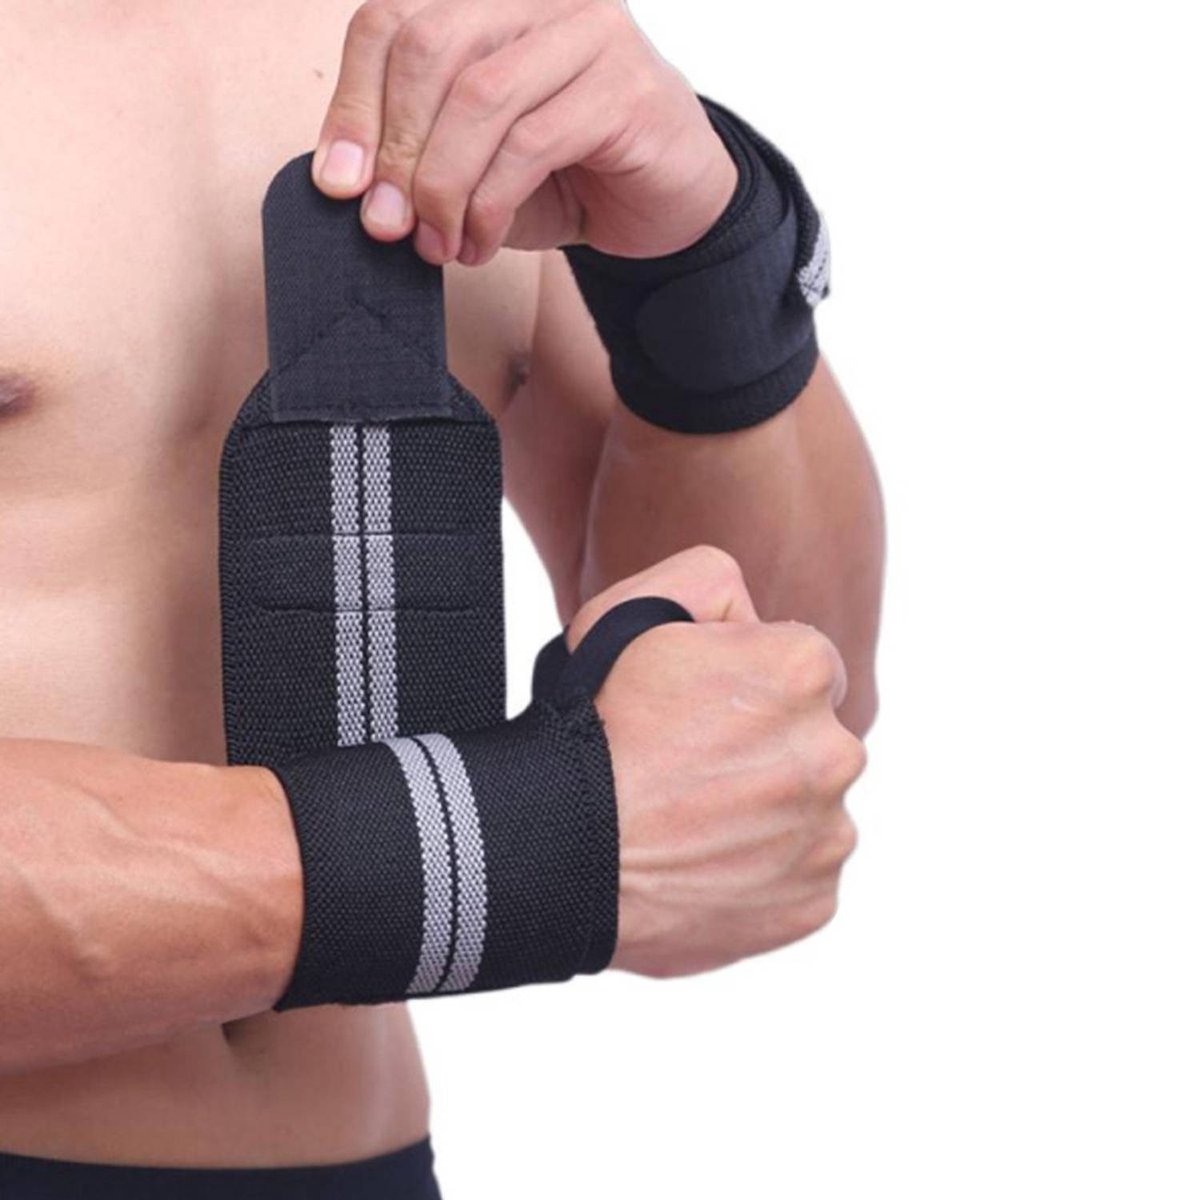 2x Fitness & CrossFit Polsband - Wrist wraps – Krachttraining – Polsbrace – Wrist Wraps voor Fitness & Crossfit – Polsbanden voor Krachttraining –Polsbraces - Zwart - 2 Stuks